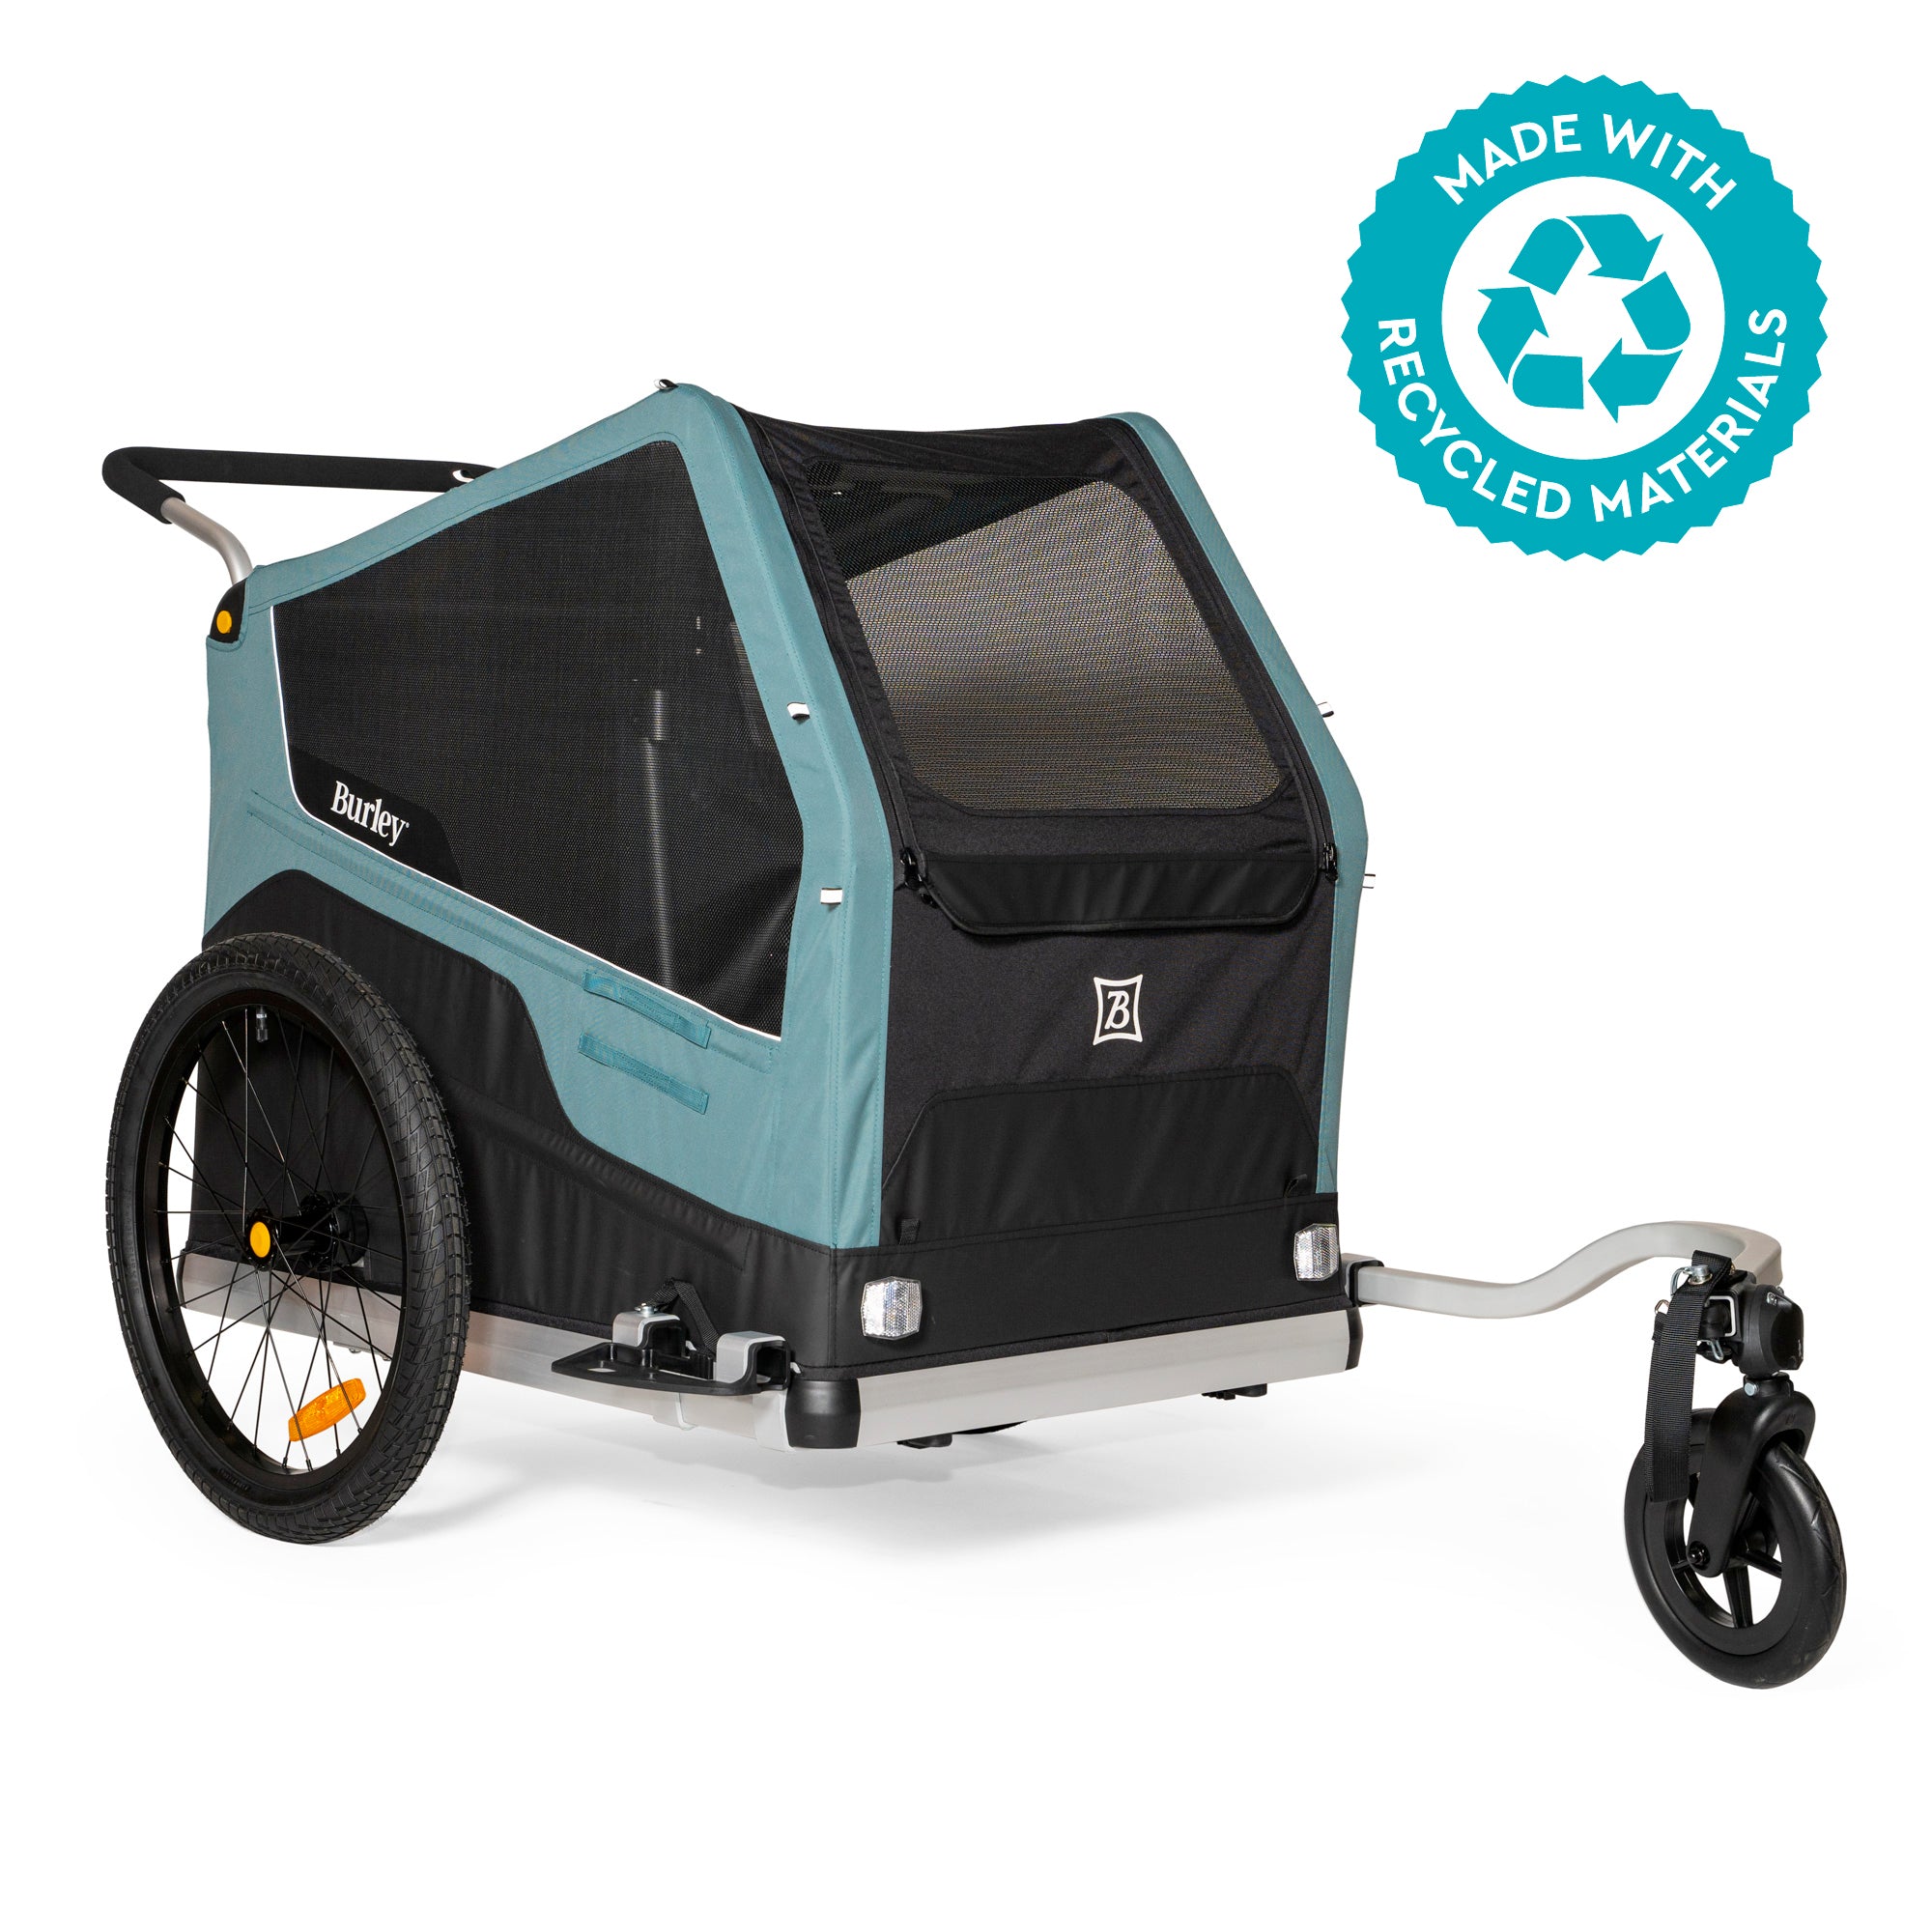 Doggo Bike - dog bike trailer designed for dogs 